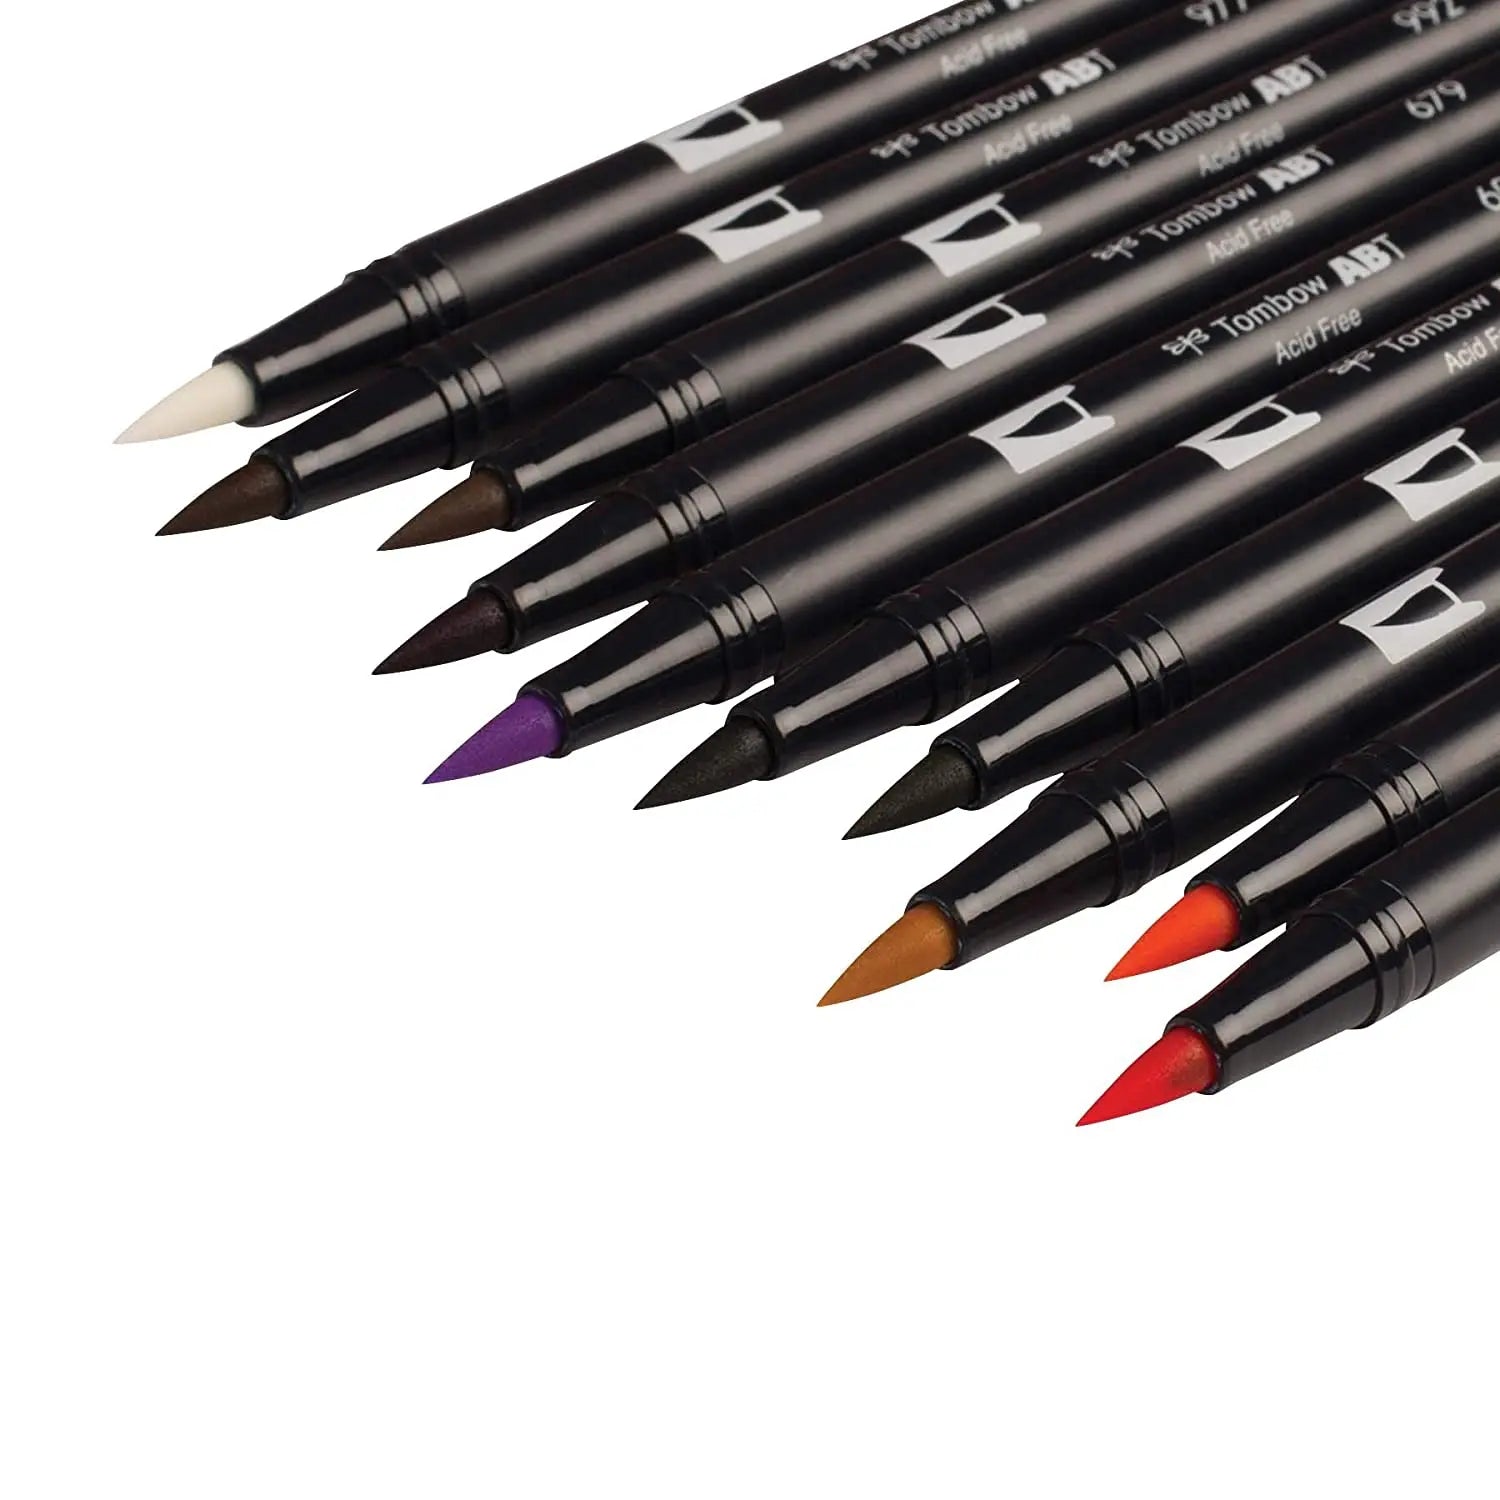 Tombow Dual Brush Pens Colour Set - Secondary Palette Tombow